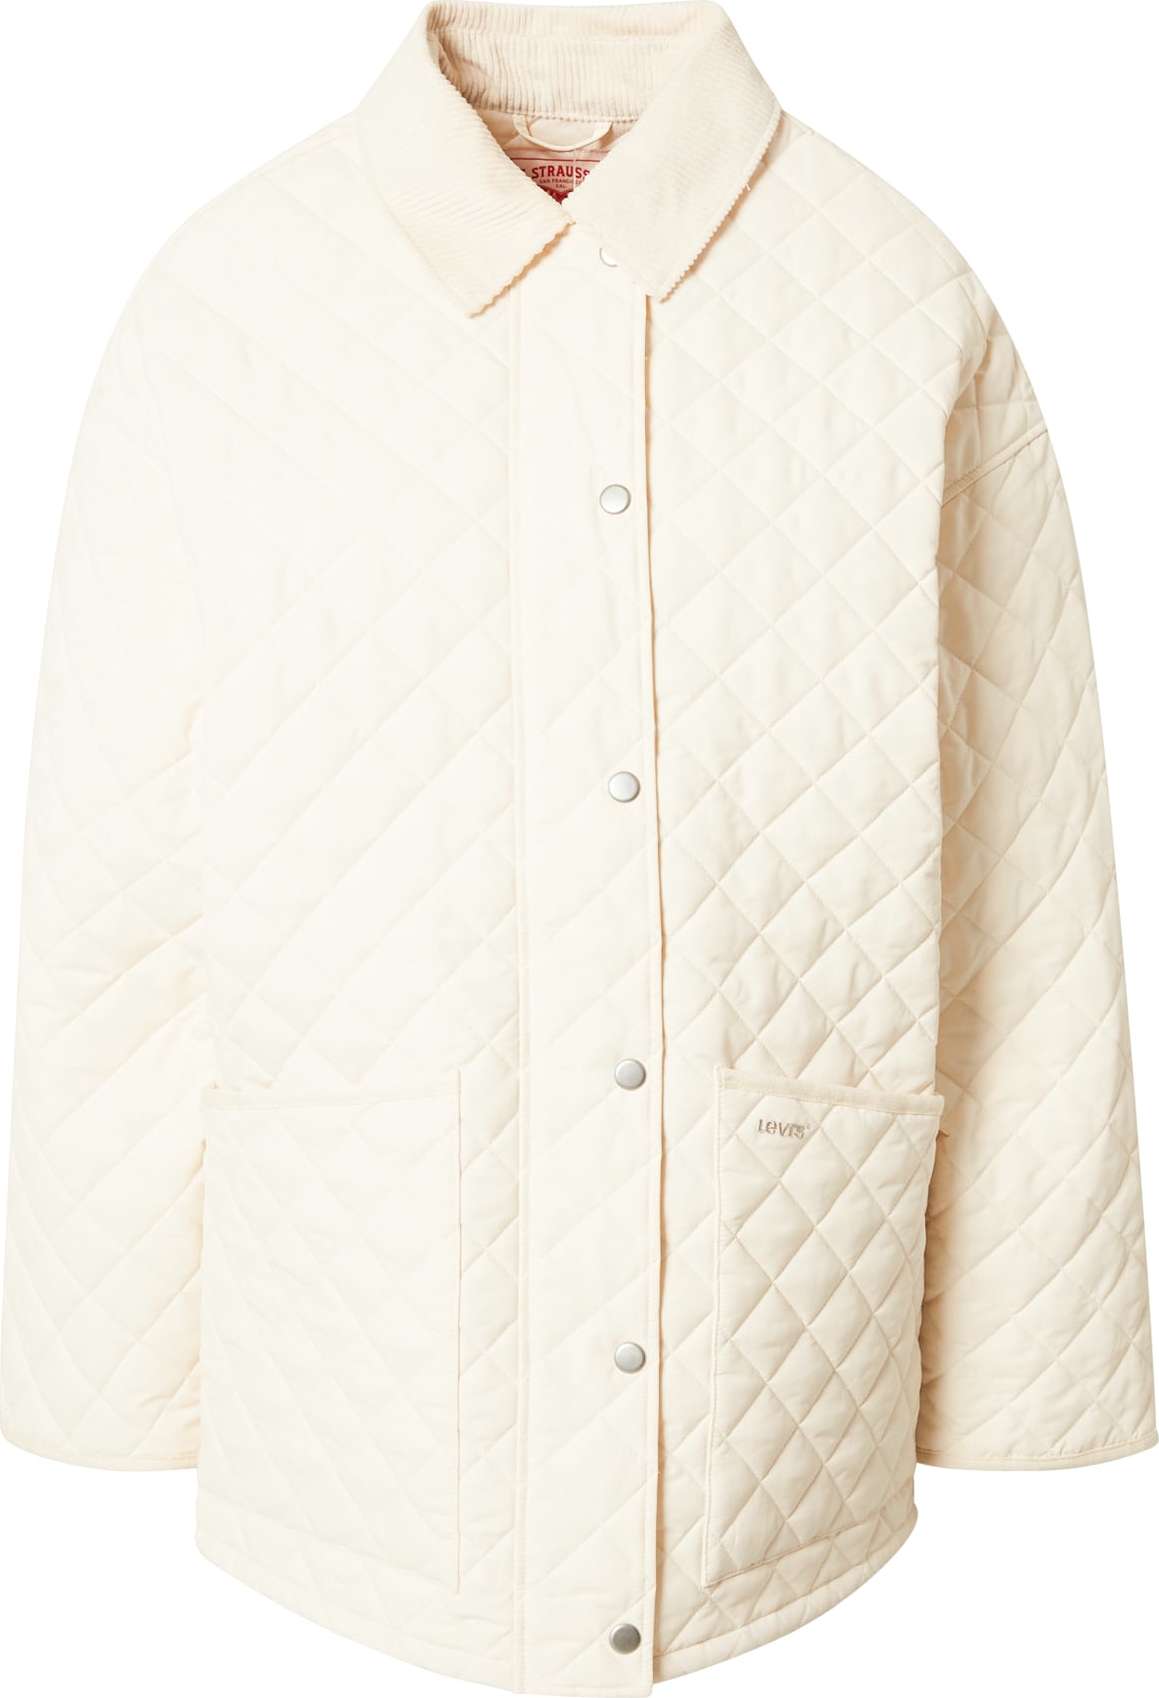 LEVI'S Přechodná bunda 'QUILTED SHIRT JKT NEUTRALS' barva bílé vlny